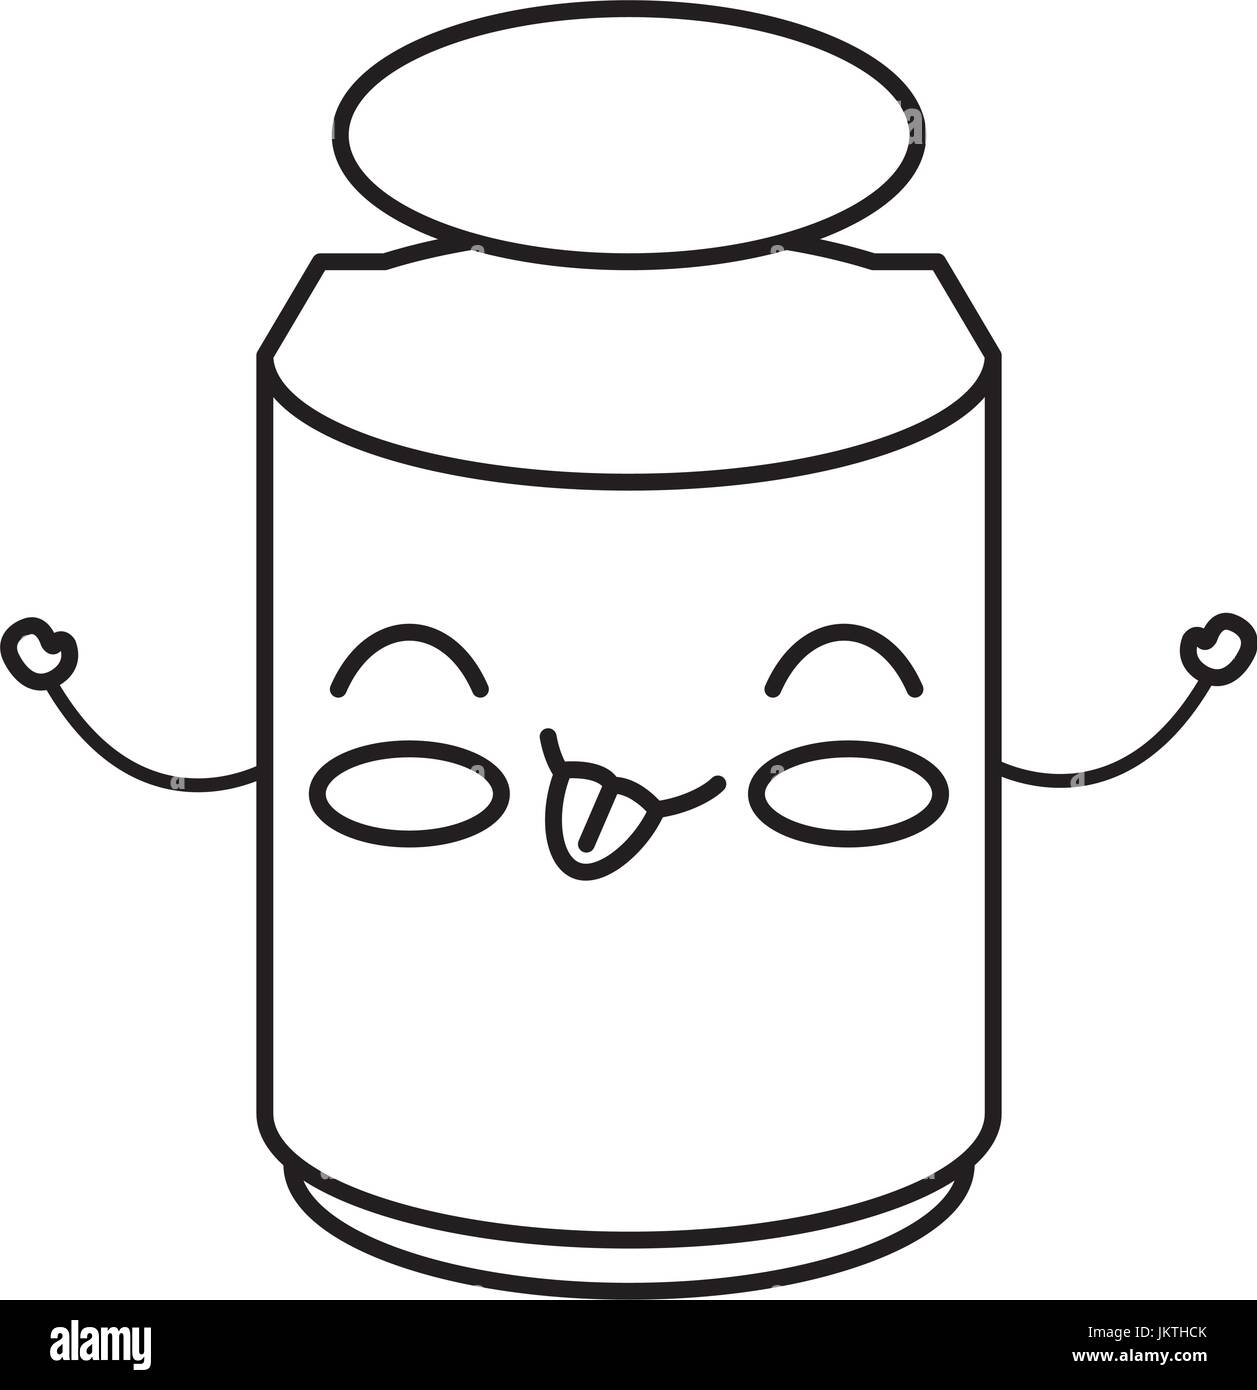 mason jar with ingredient kitchen kawaii character Stock Vector Image ...